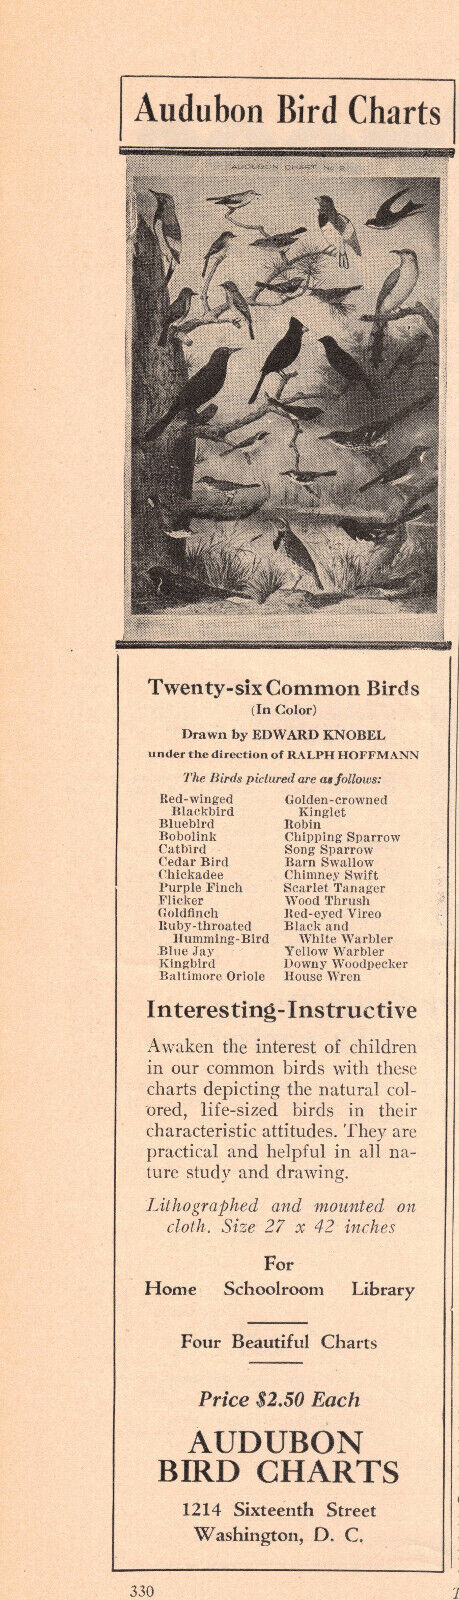 1927 Audubon Bird Charts Vintage Print Ad - 26 Common Birds In Color